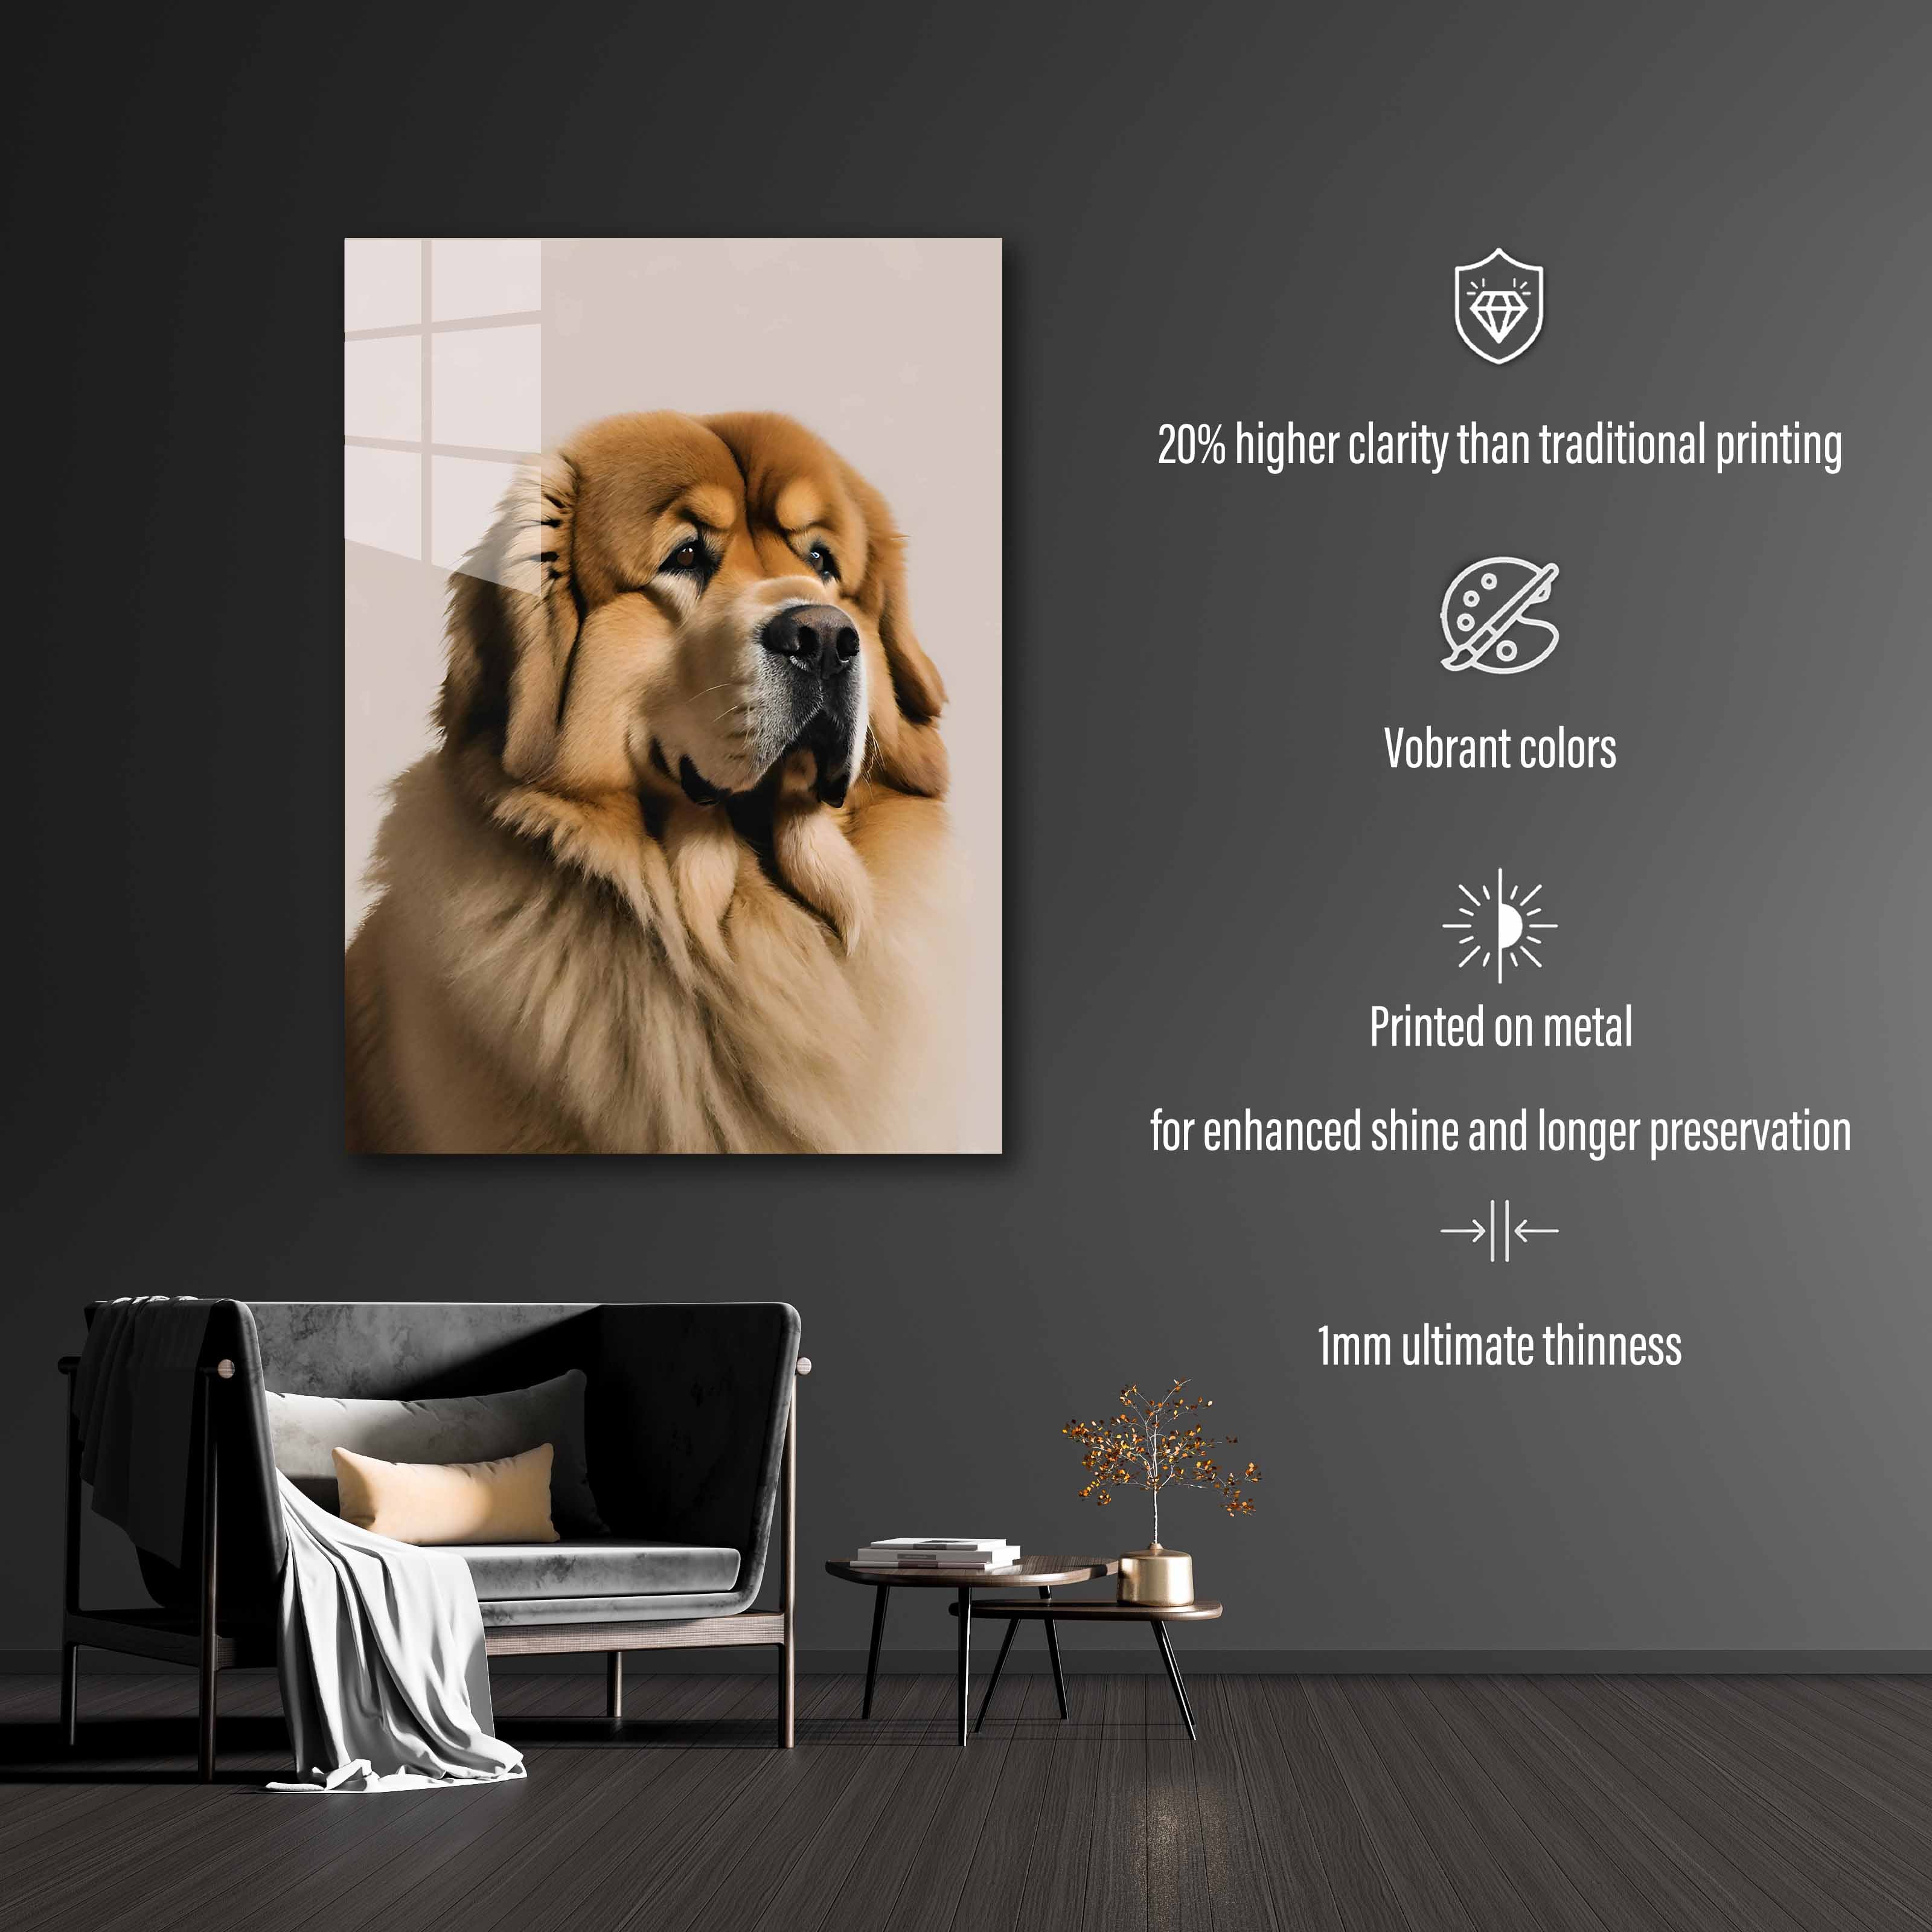 Tibetian Mastiff Pet-designed by @DynCreative